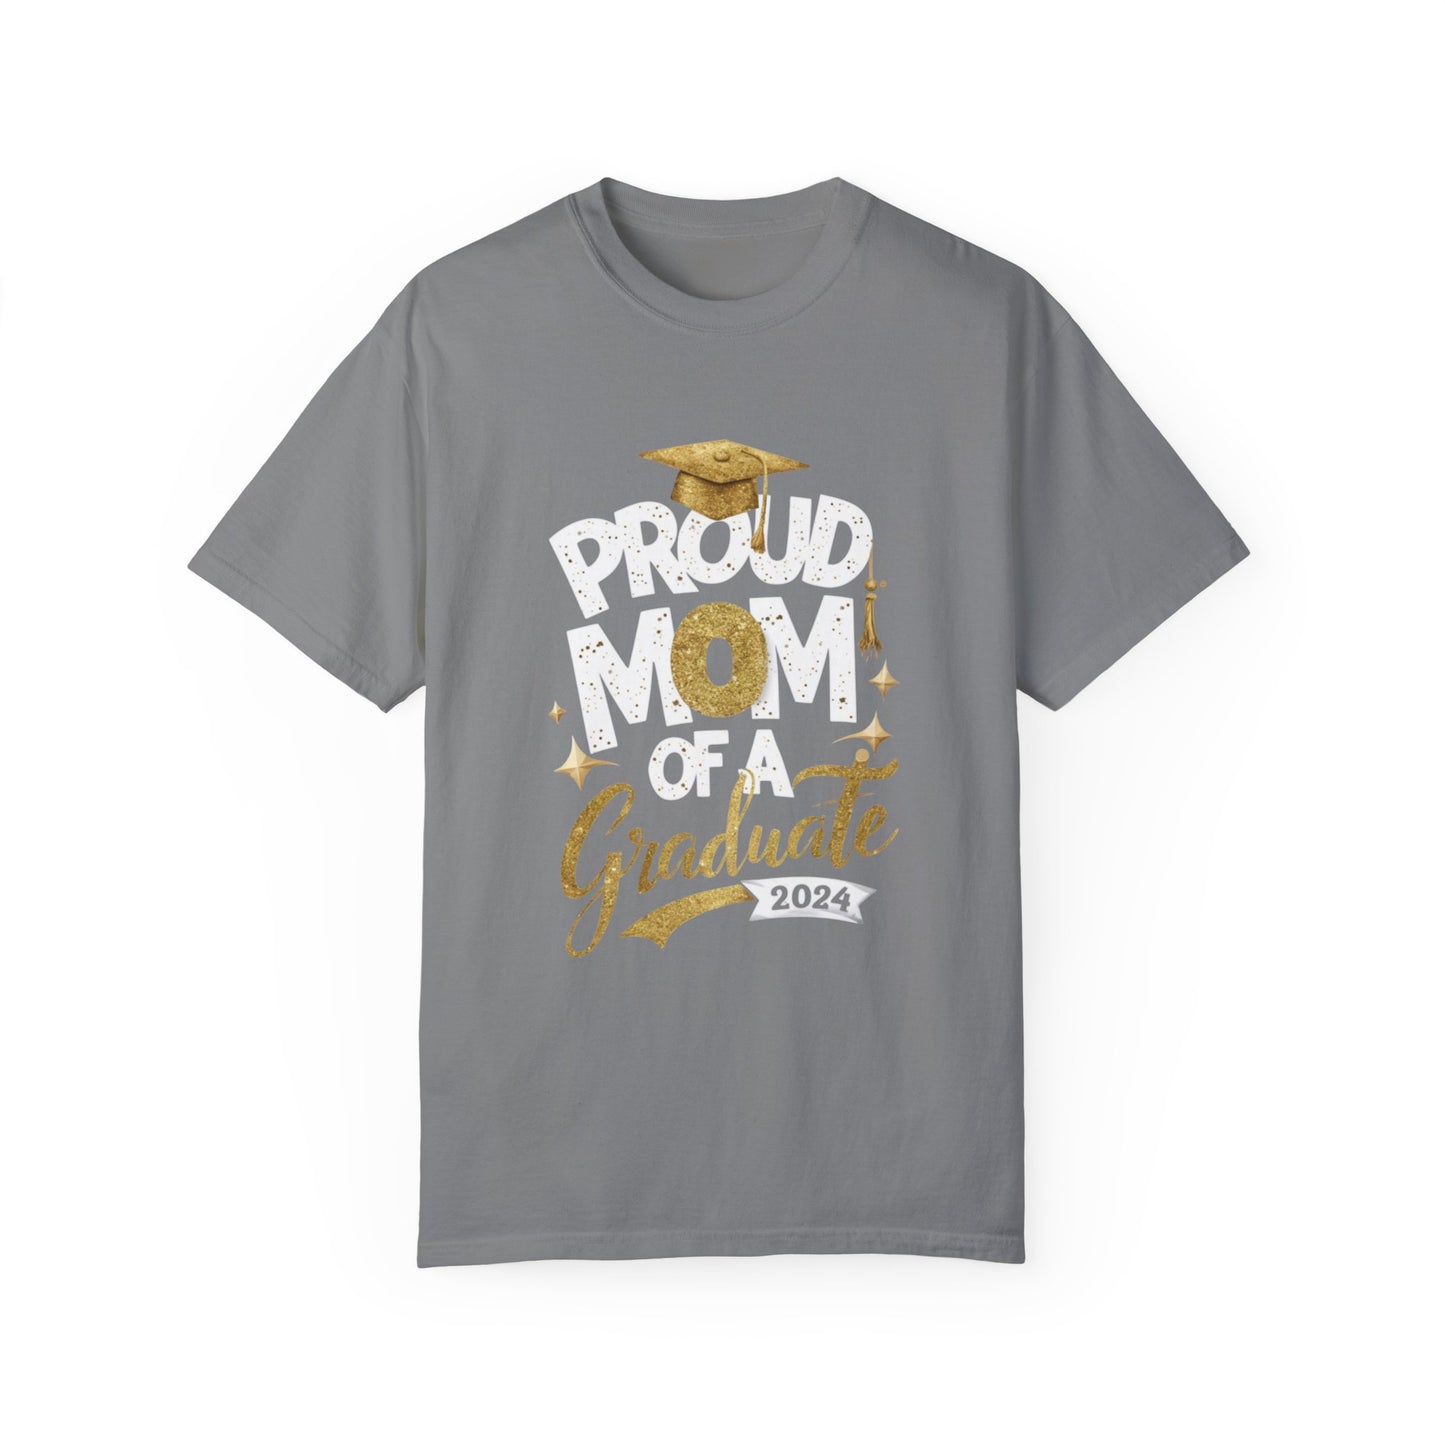 Proud Mom of a 2024 Graduate Unisex Garment-dyed T-shirt Cotton Funny Humorous Graphic Soft Premium Unisex Men Women Grey T-shirt Birthday Gift-9